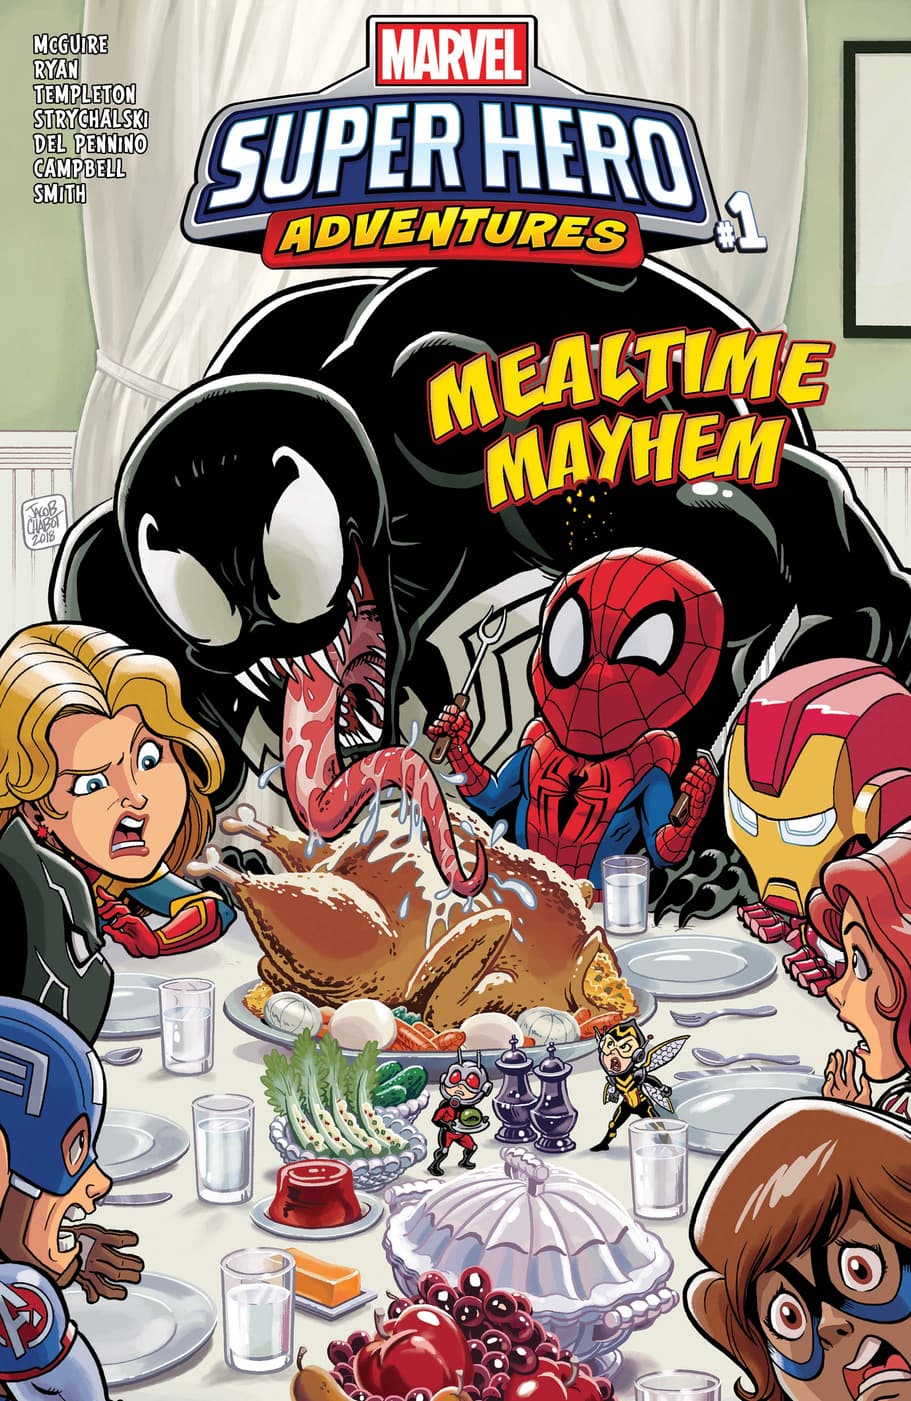  Marvel Super Hero Adventures: Captain Marvel - Mealtime Mayhem (2018) #1